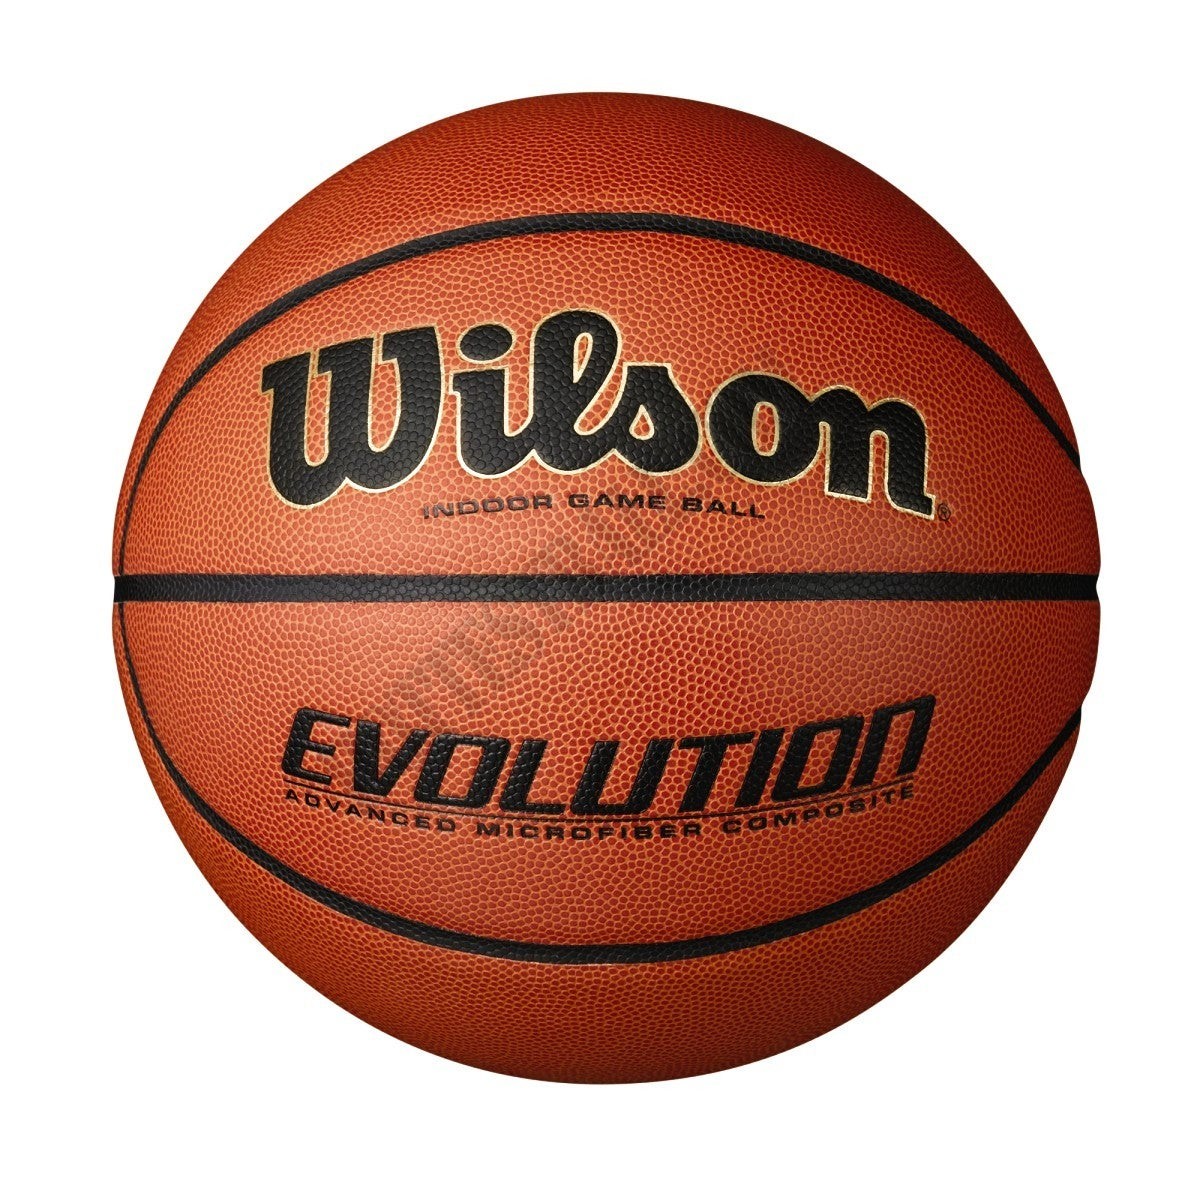 Evolution Game Basketball - Wilson Discount Store - Evolution Game Basketball - Wilson Discount Store